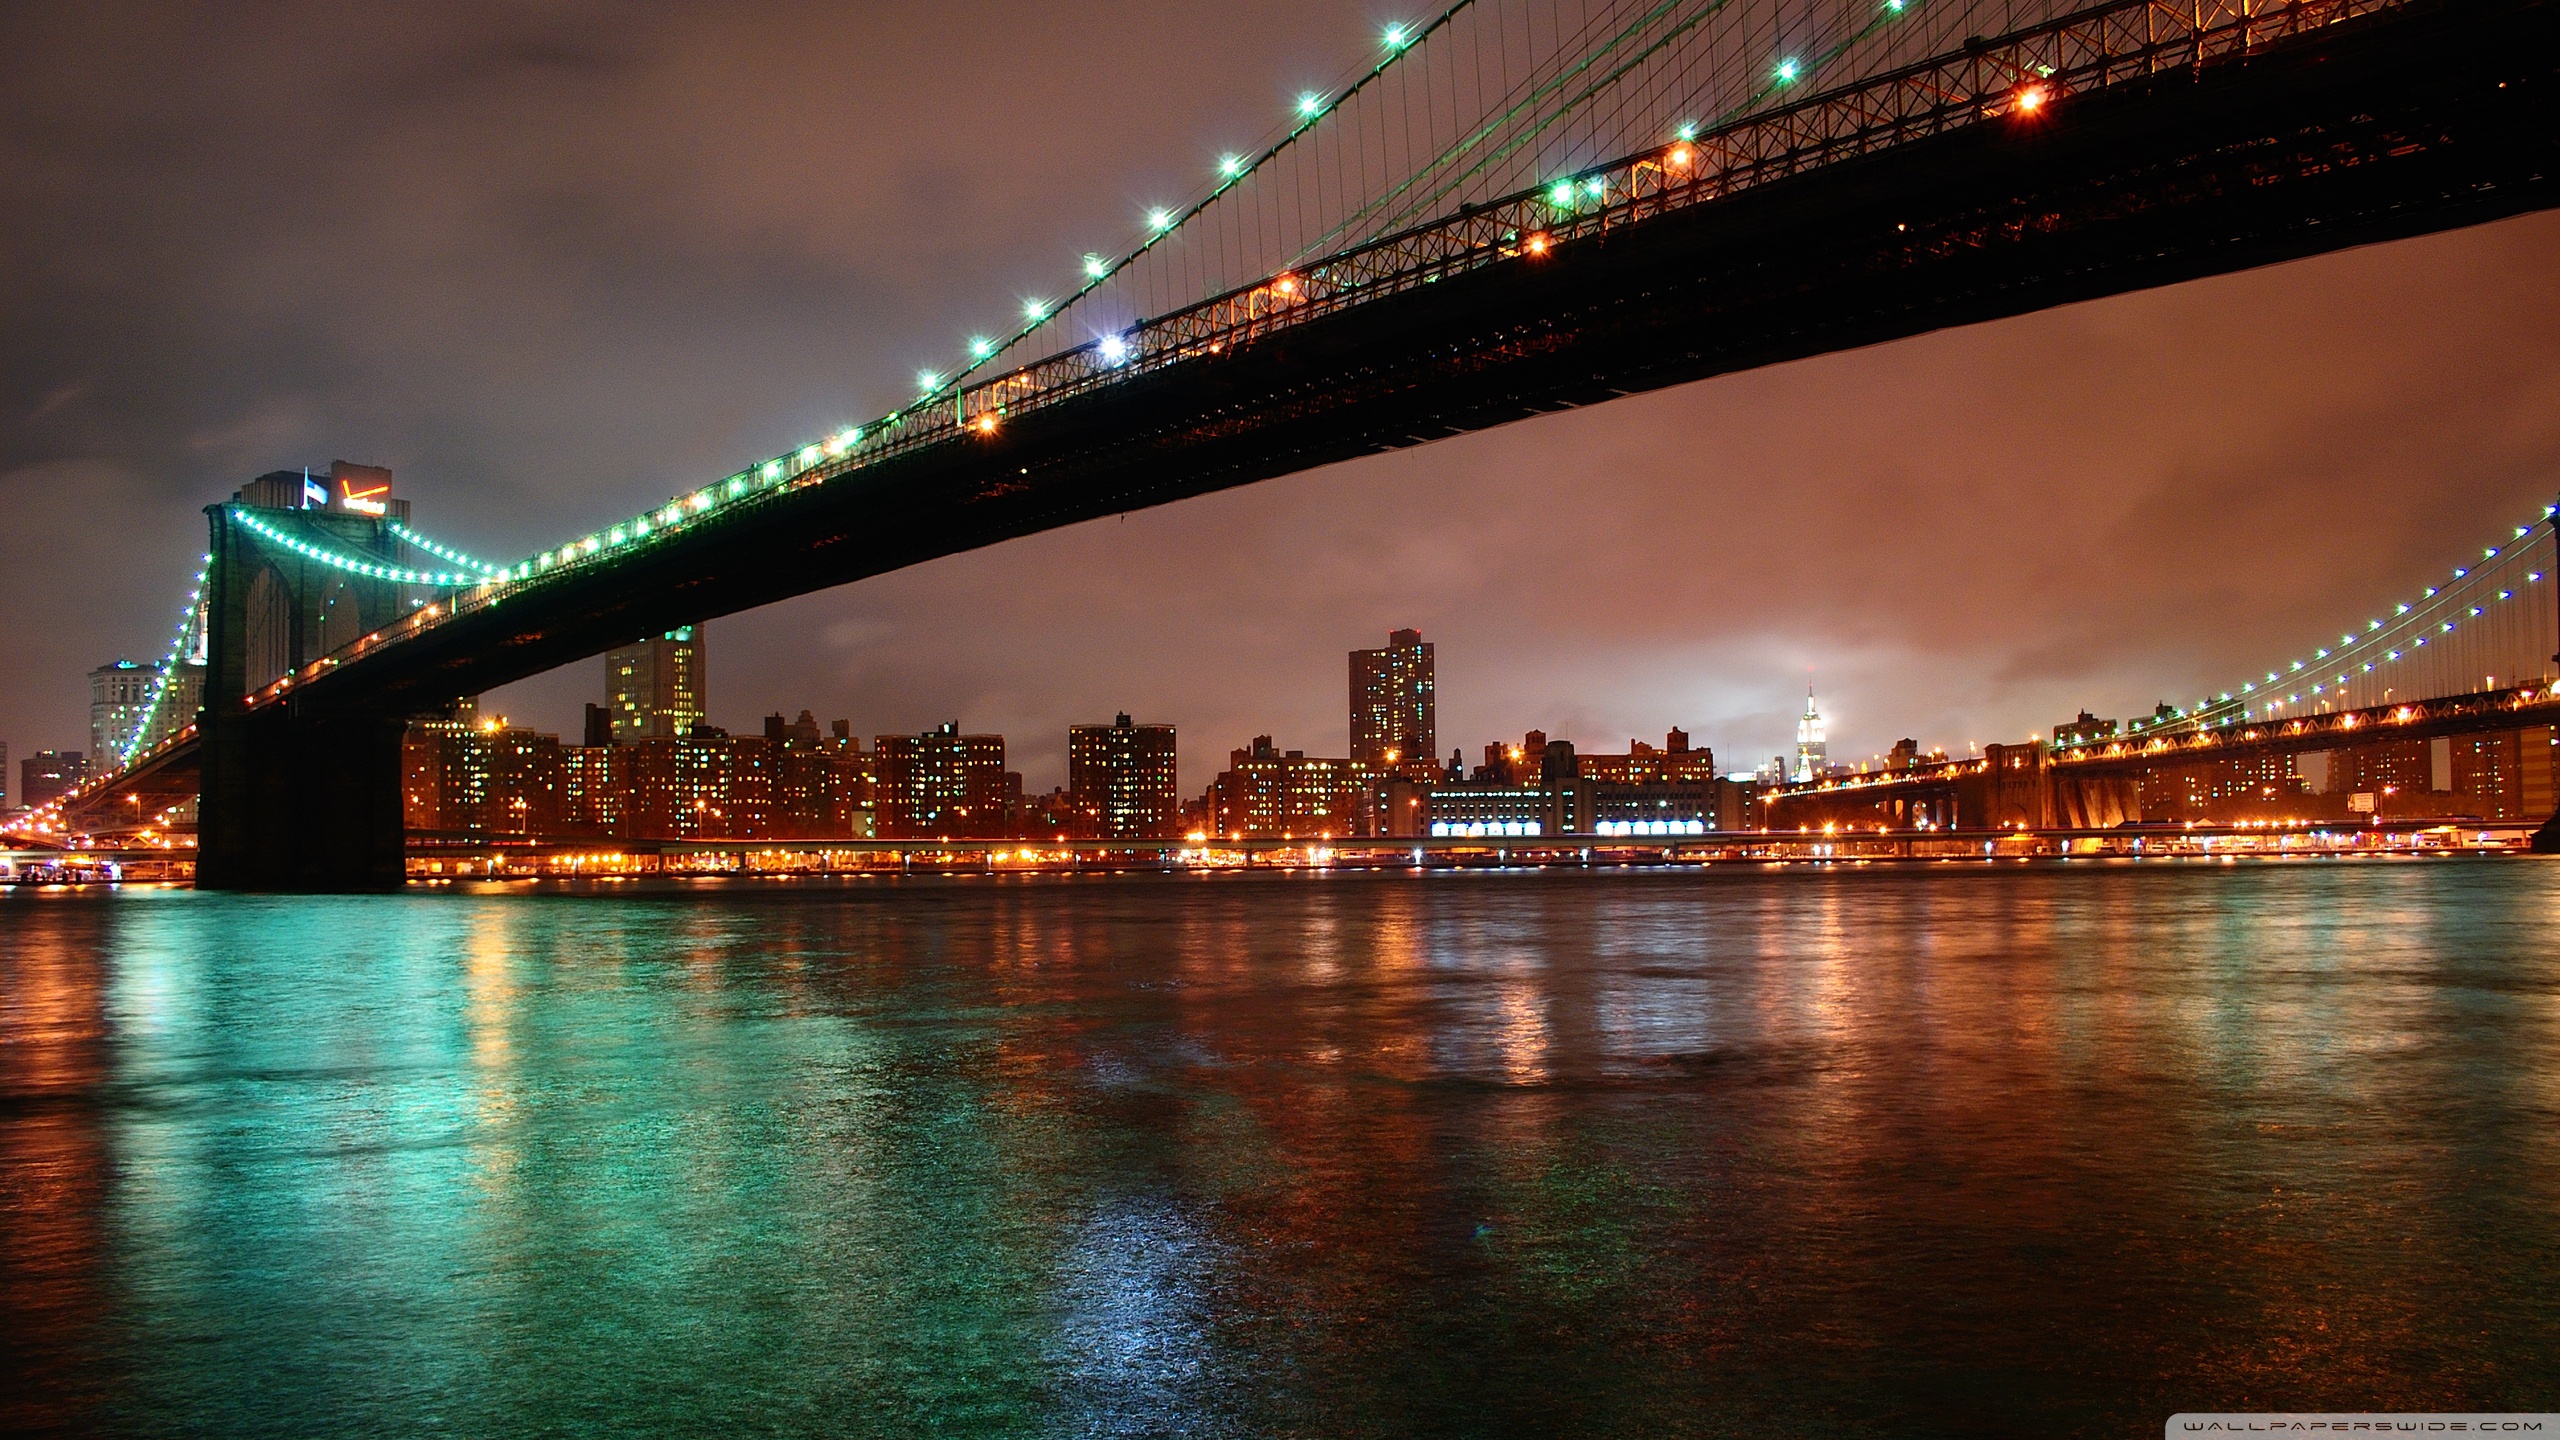 Download 21 brooklyn-bridge-new-york-wallpapers 2560x1440-Brooklyn-Bridge-In-New-York-1440P-Resolution-HD-4k-.jpg